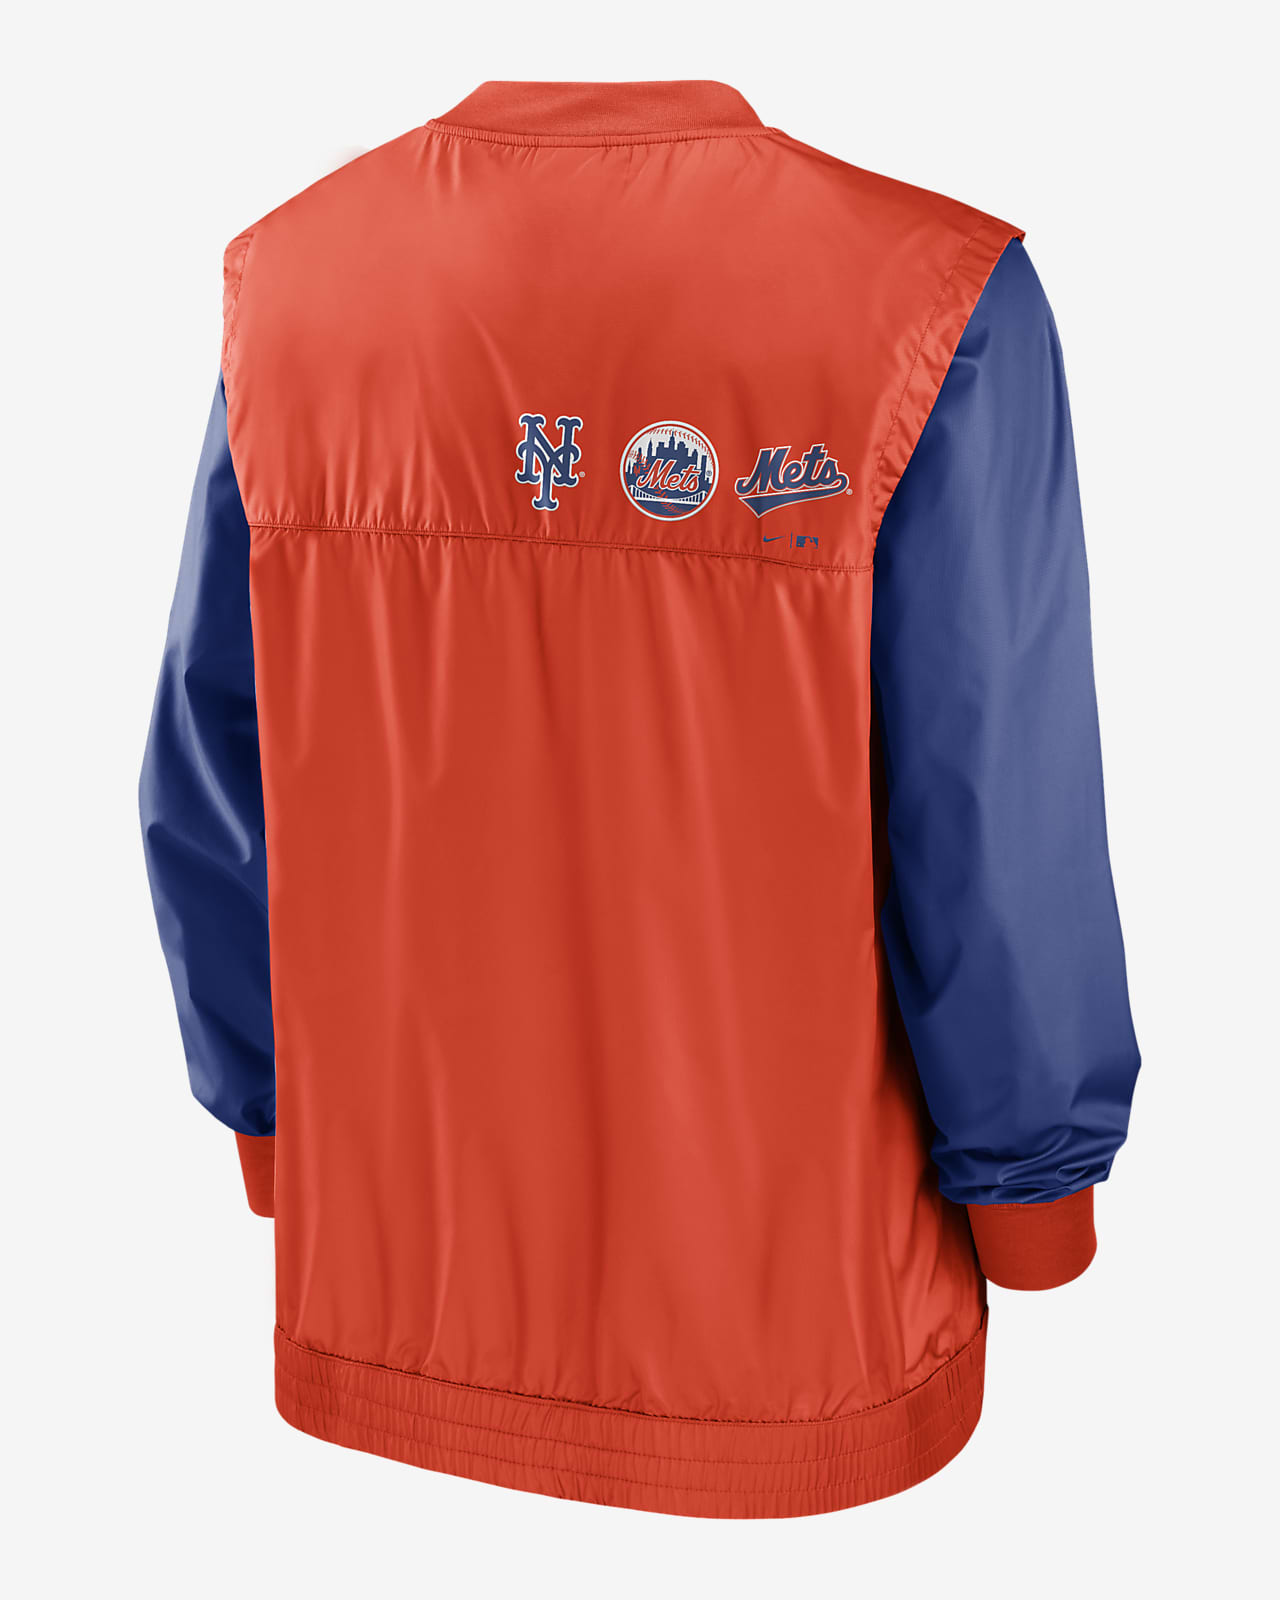 Nike Rewind Warm Up (MLB New York Mets) Men's Pullover Jacket